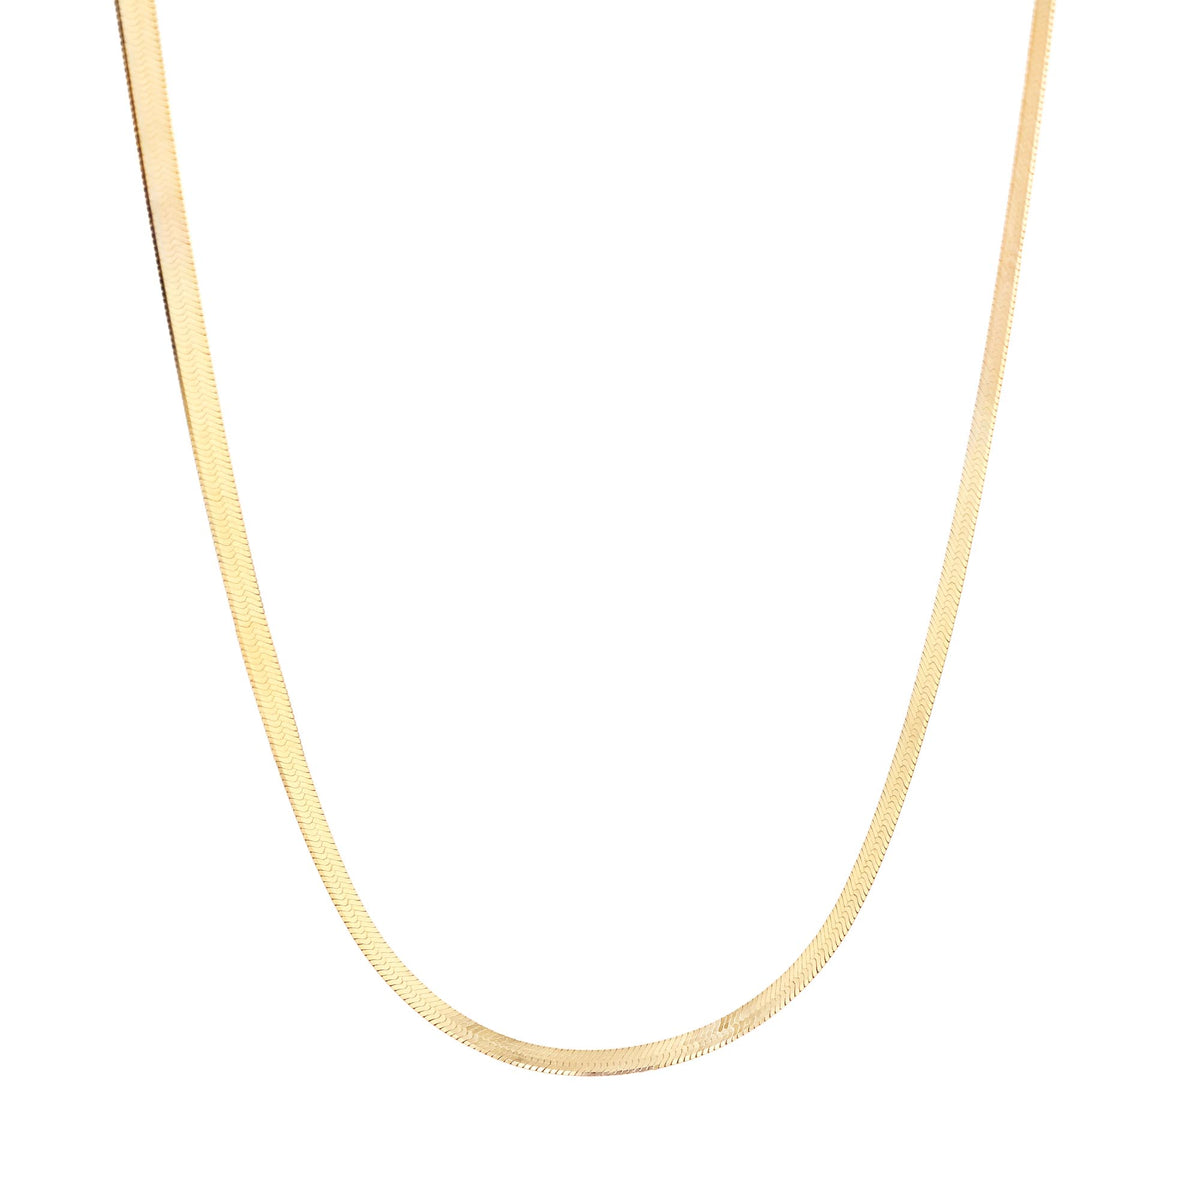 Herringbone Necklace 16in in 14K Yellow Gold|herringbone necklace in 14k yellow gold metal on 16 inch chain